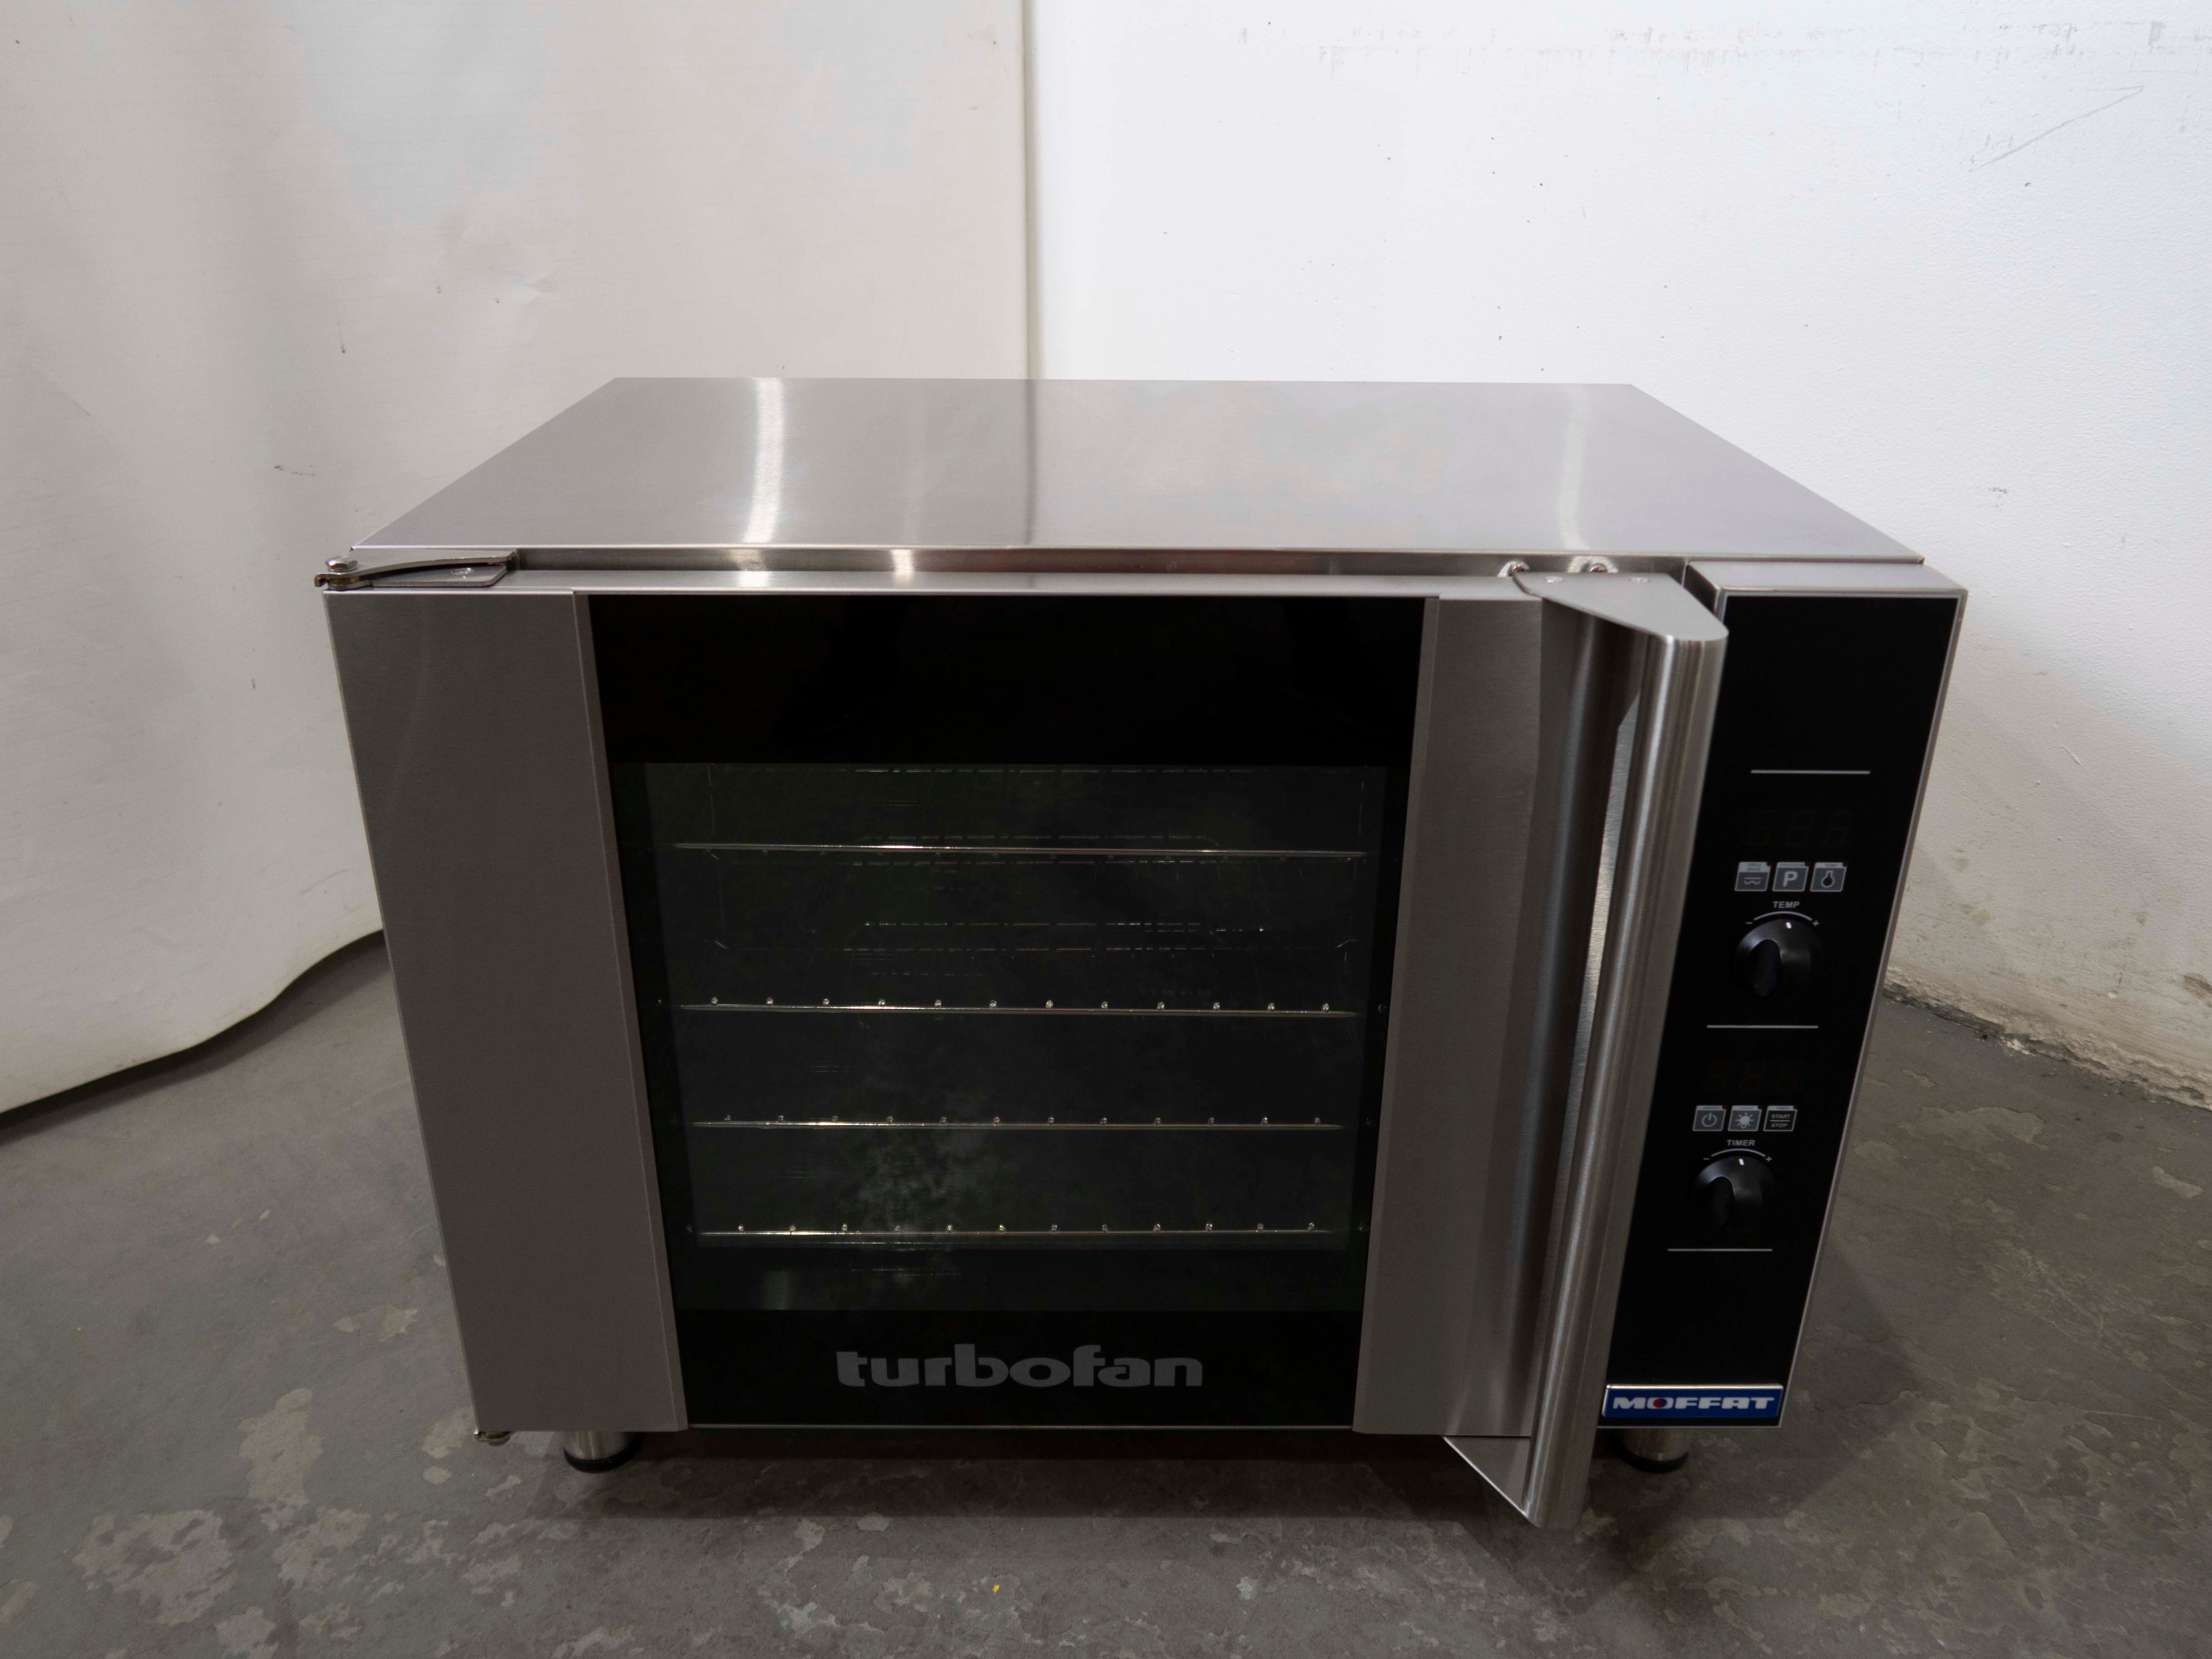 Thumbnail - Turbofan E31D4 Convection Oven